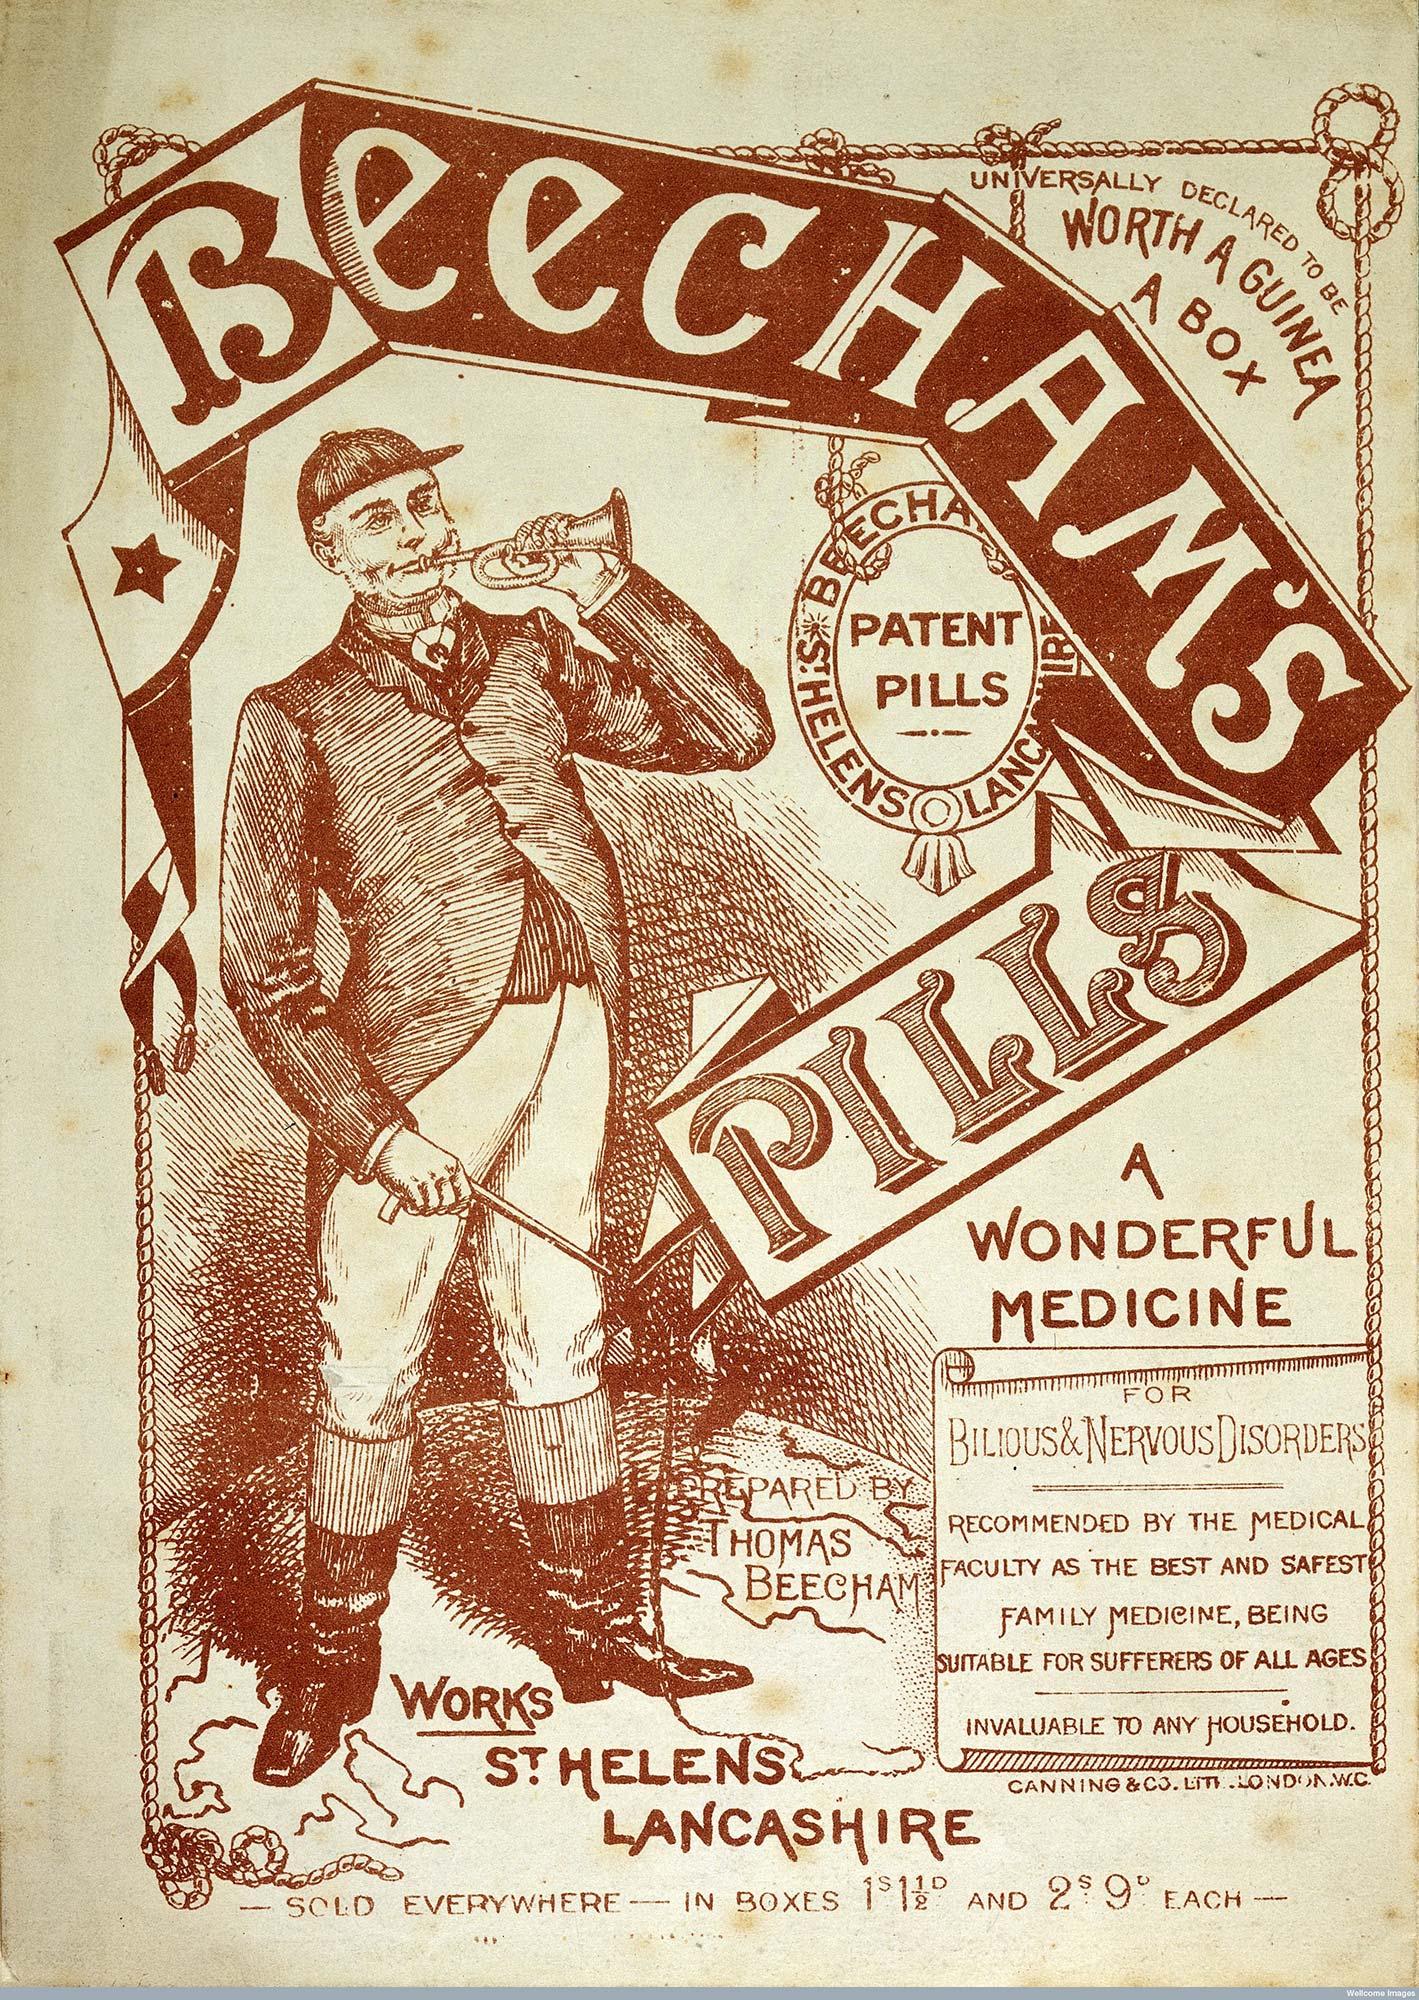 https://www.bl.uk/collection-items/advertisement-for-beechams-pills